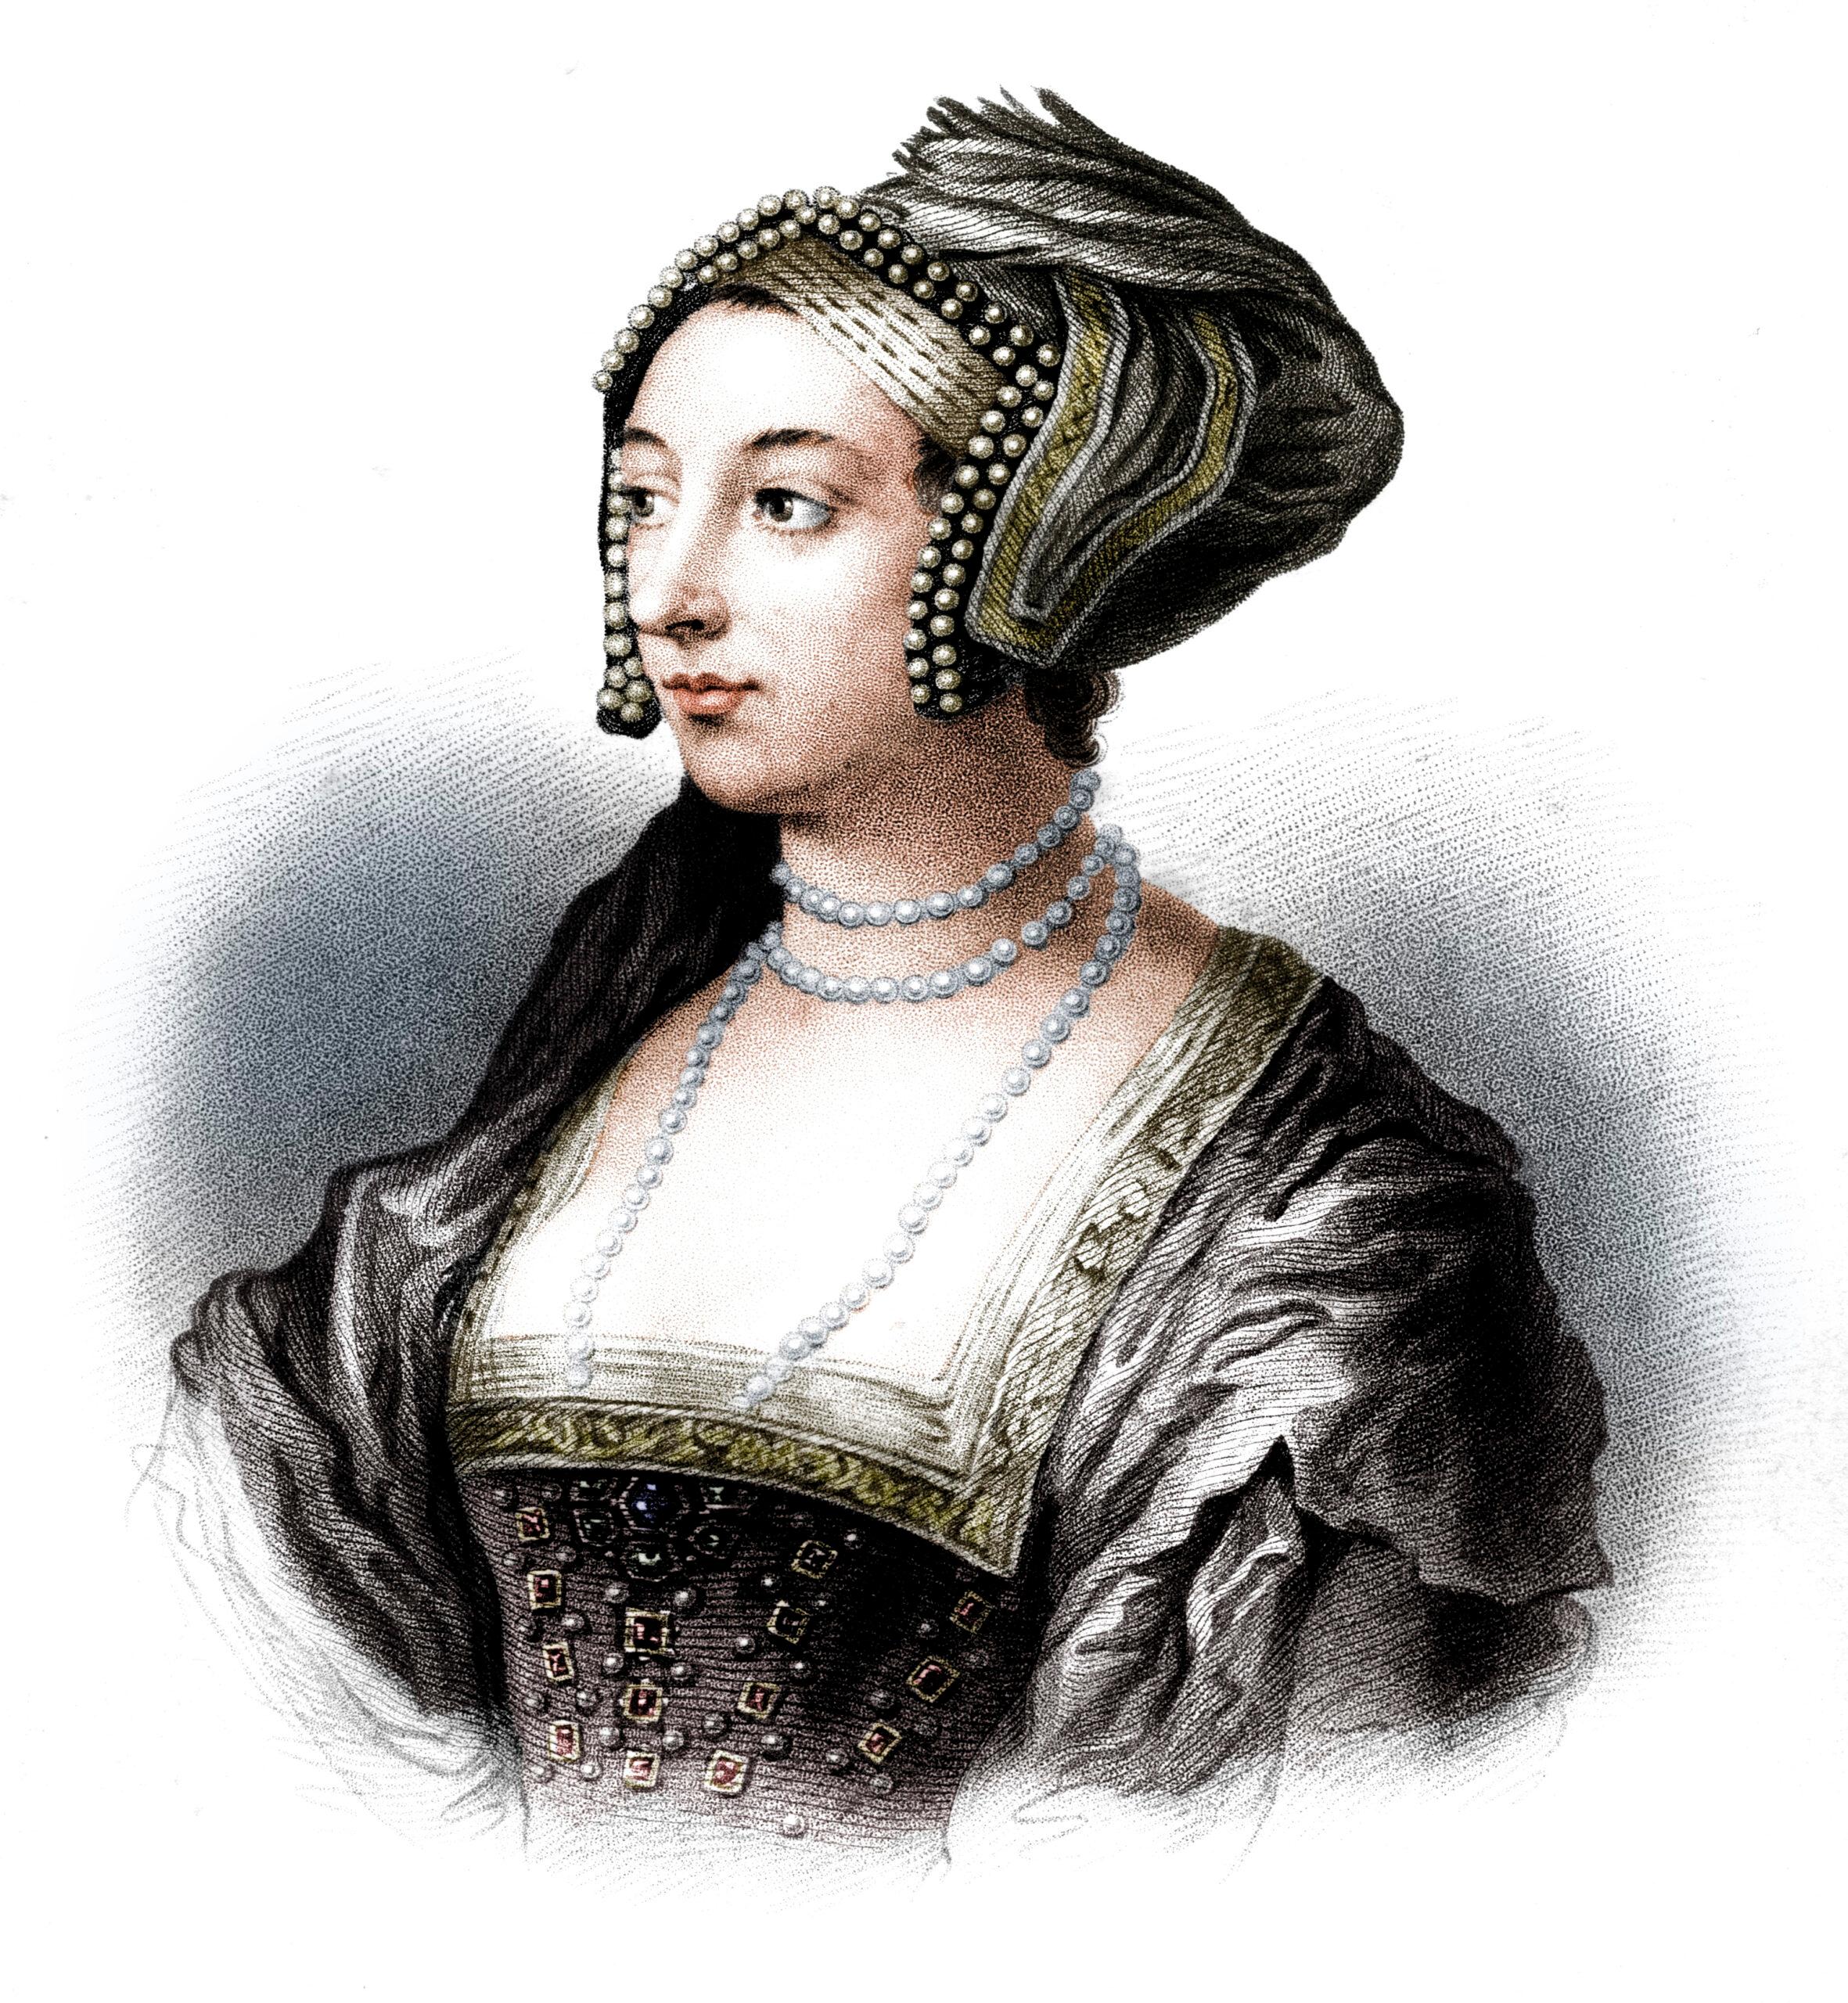 An ancient photo of Anne Boleyn in her royal apparel